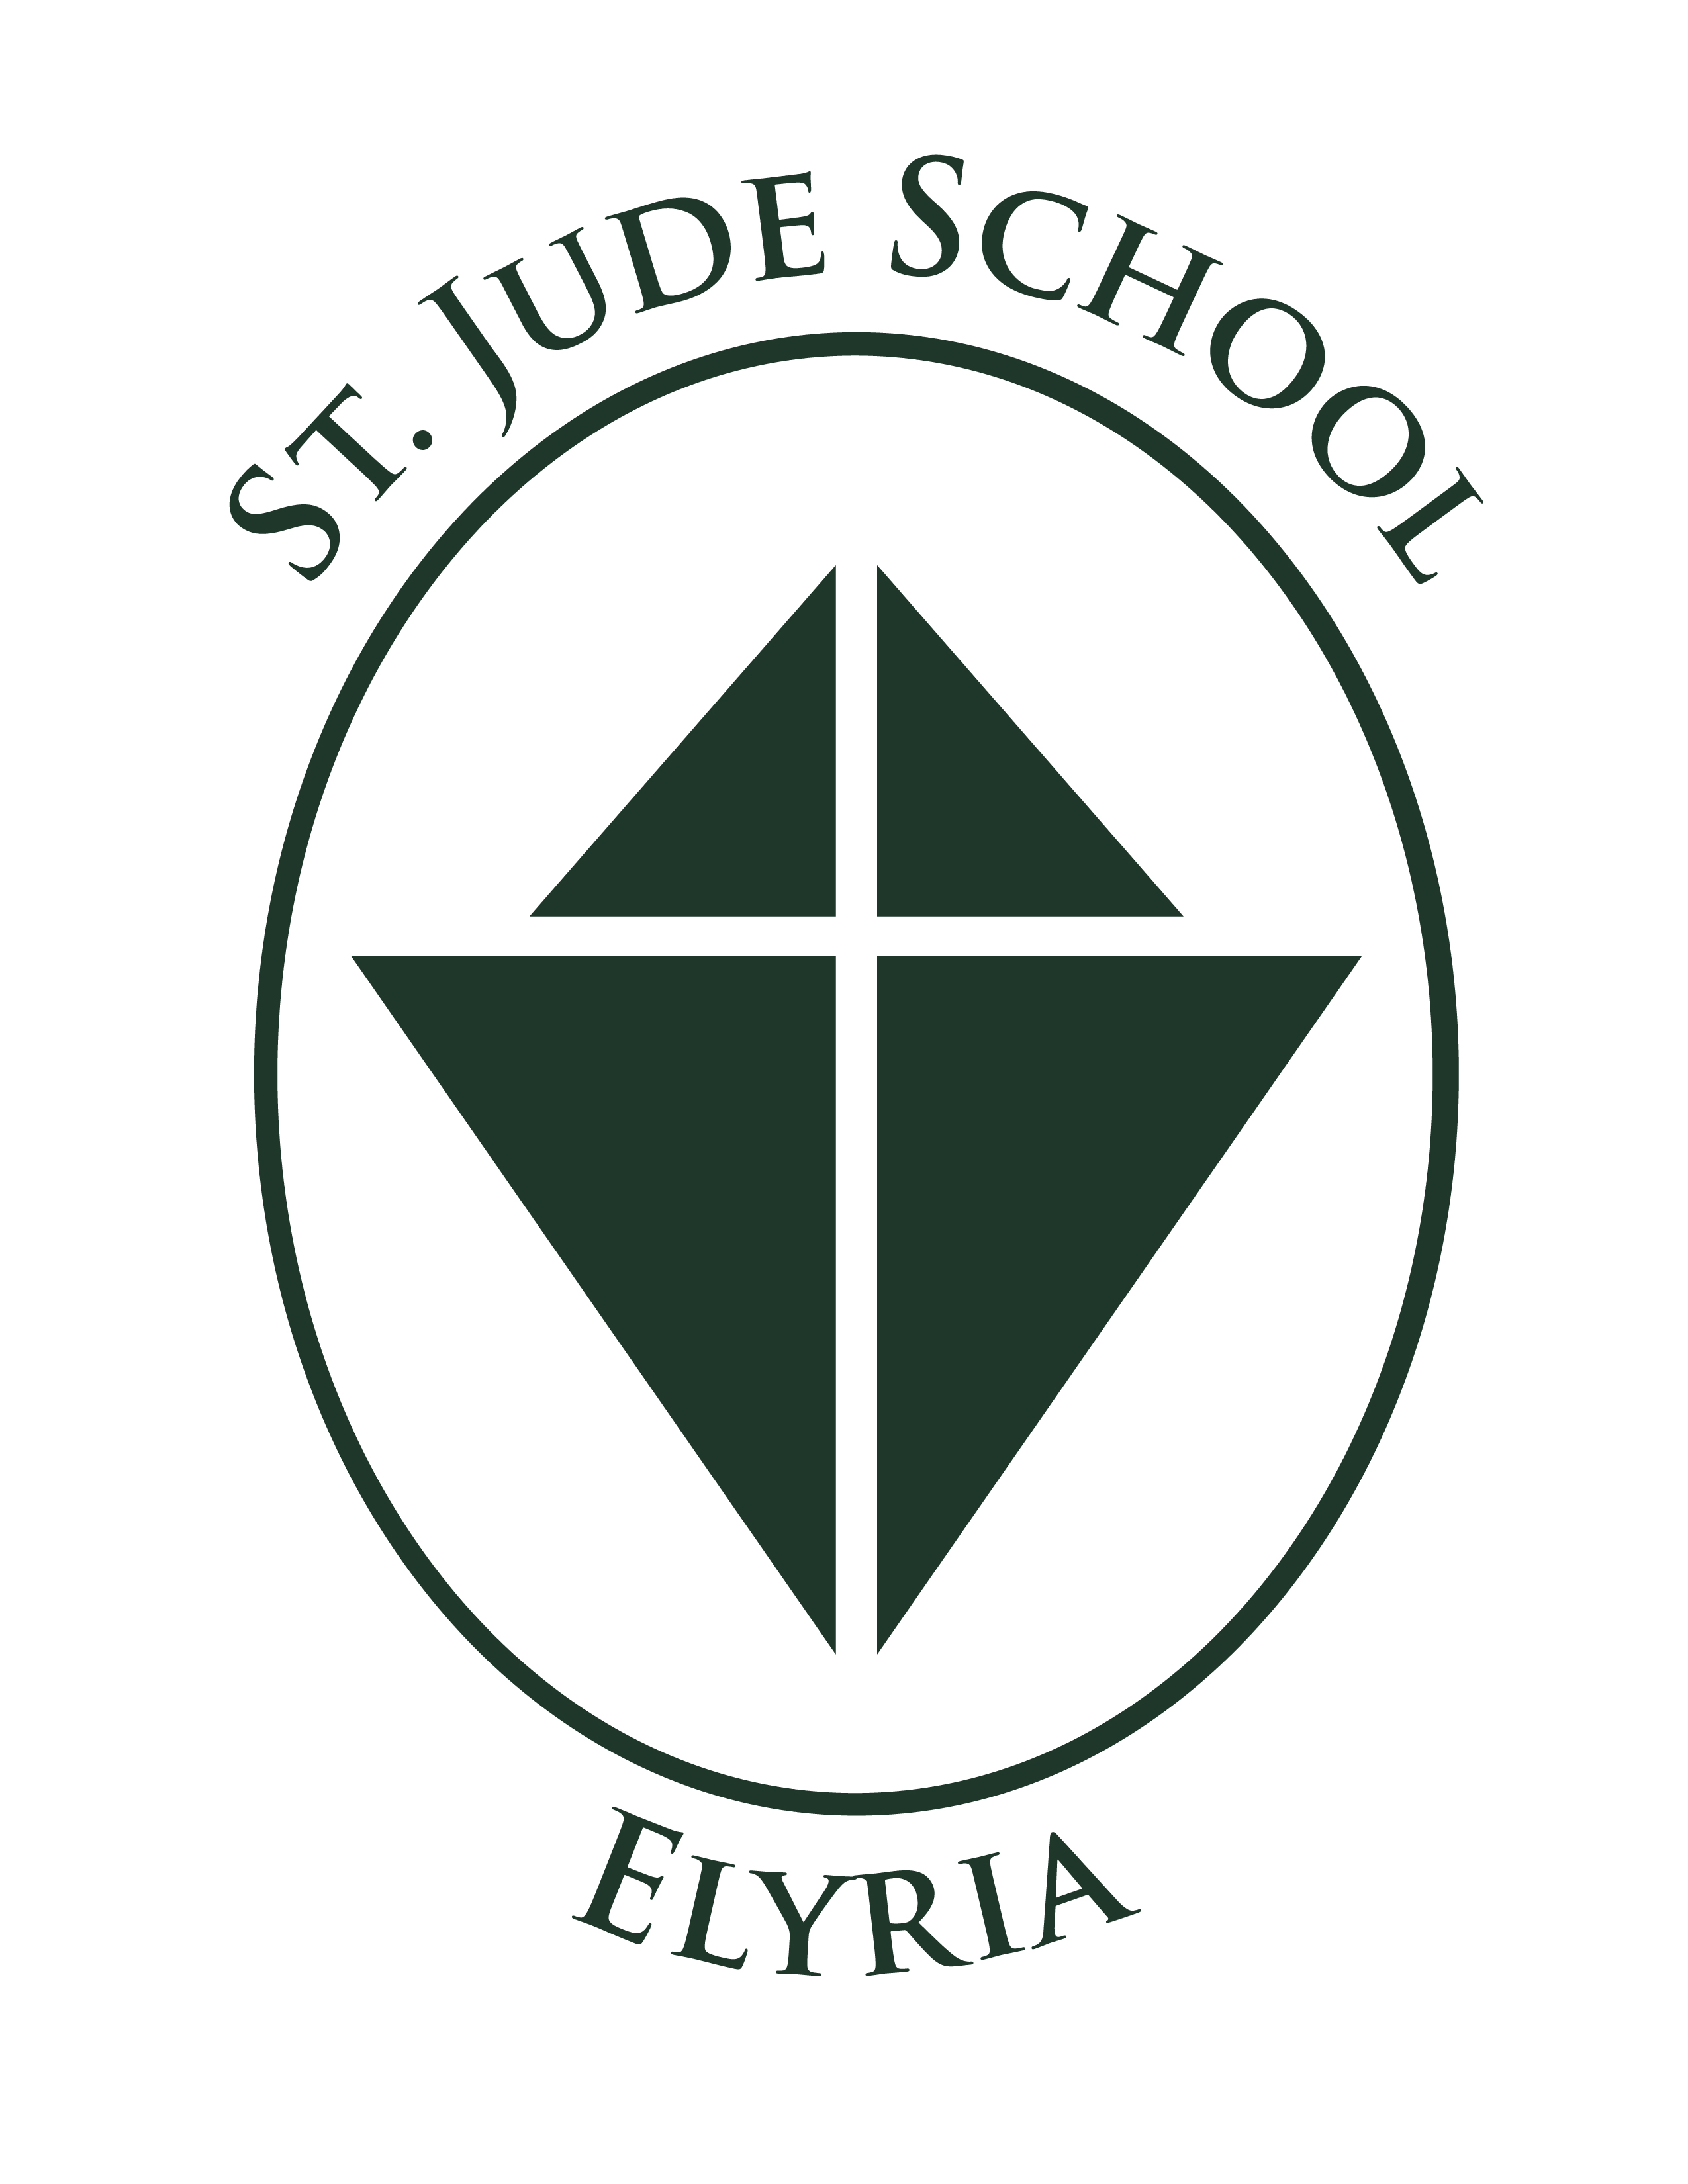 St Jude School